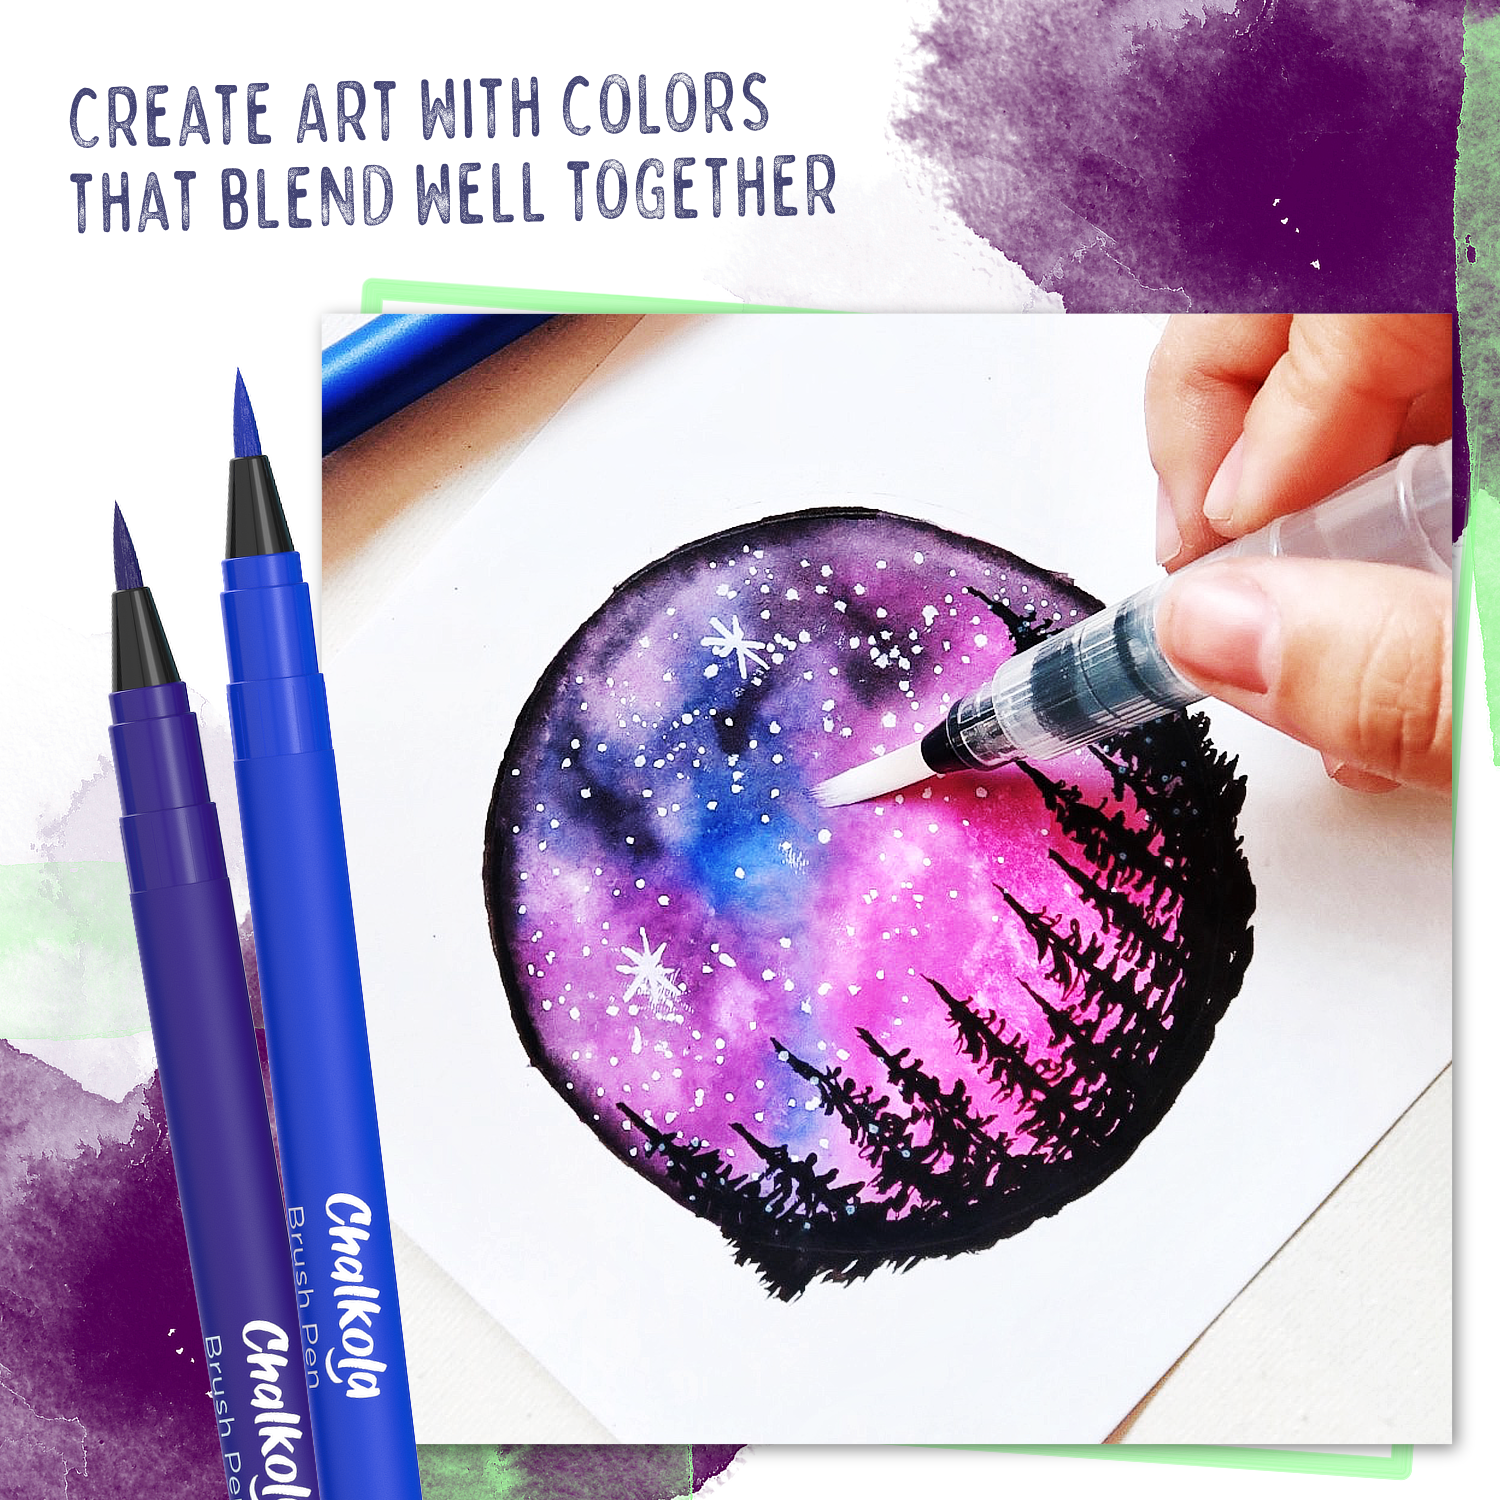 How to Use Watercolor Brush Pens - Chalkola - Chalkola Art Supply